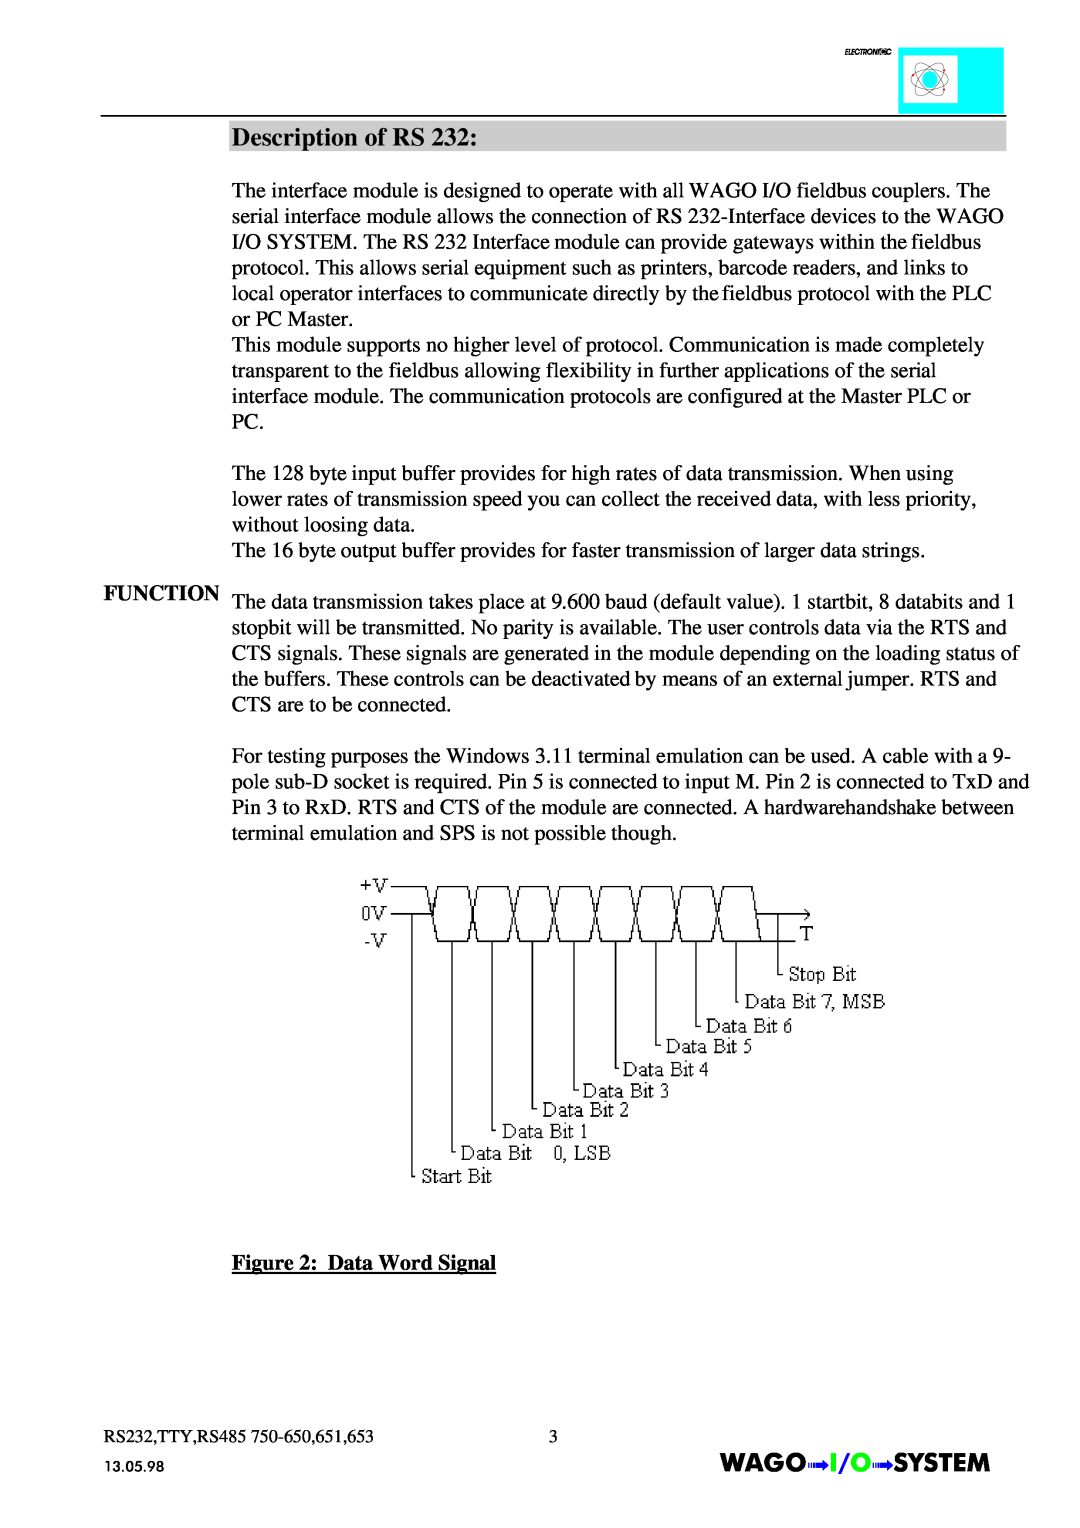 Quatech INTERBUS S manual Description of RS, Data Word Signal 